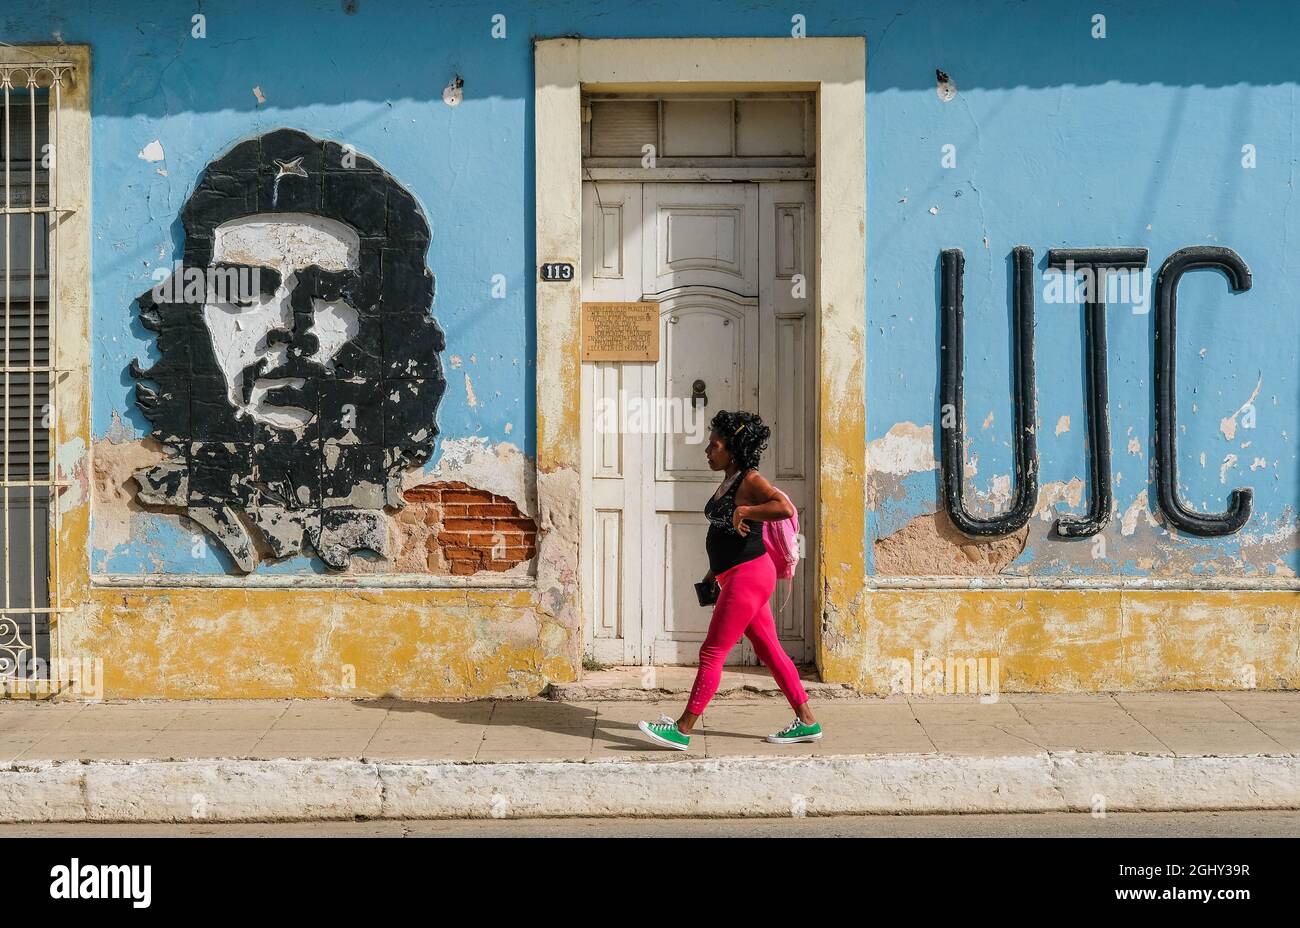 A woman walks past an image of Che Guevara in Trinidad, Cuba. Stock Photo